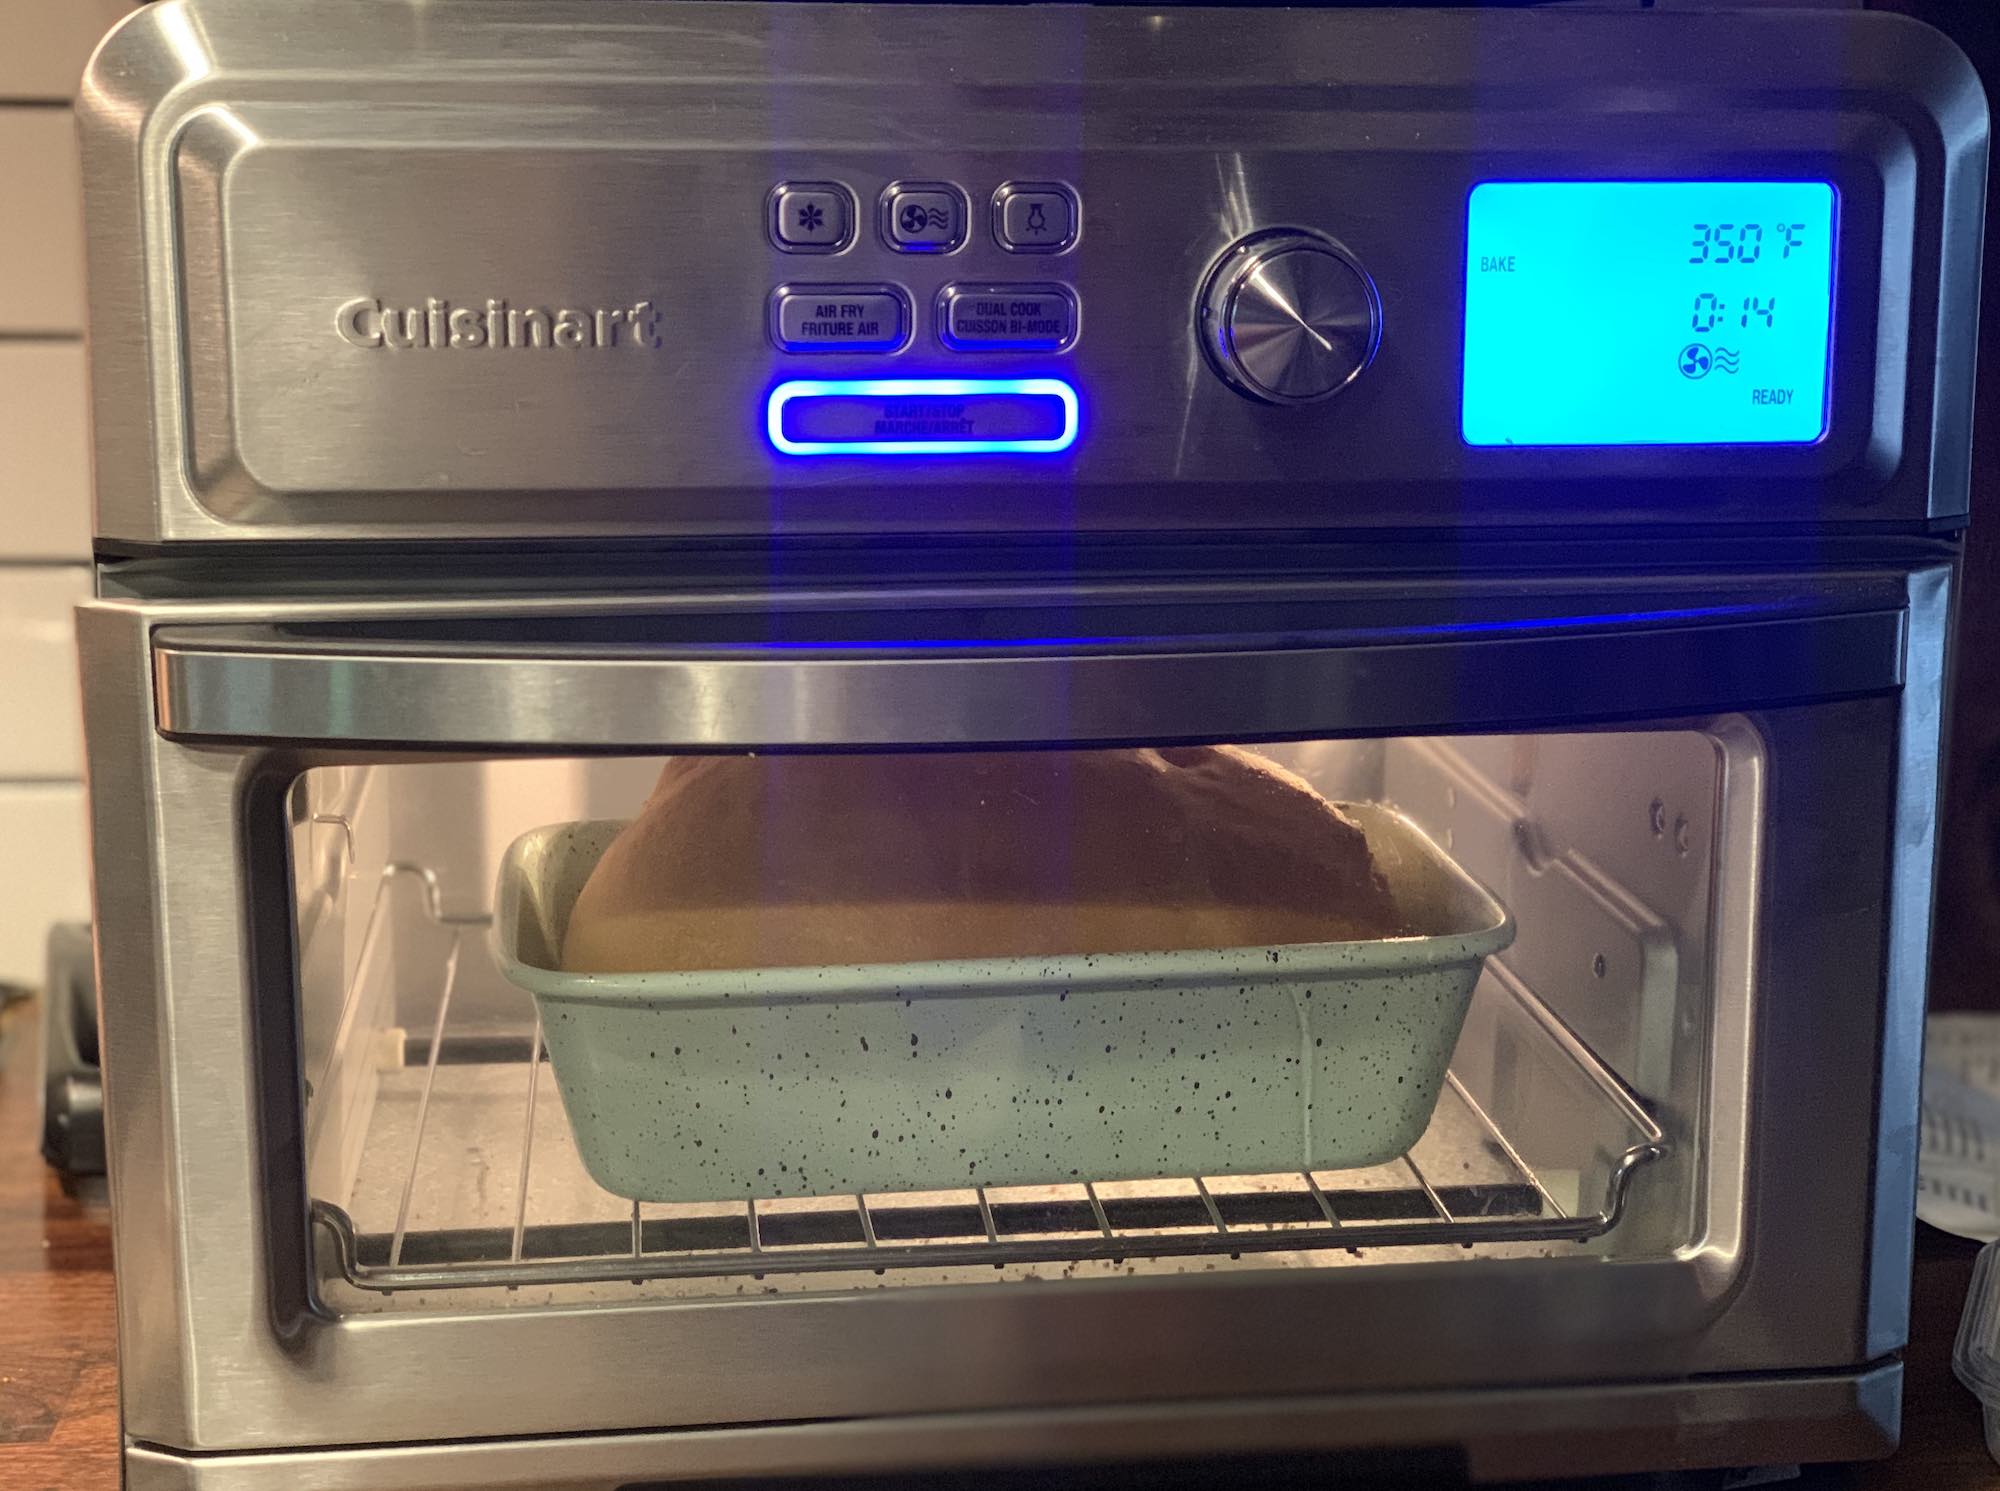 https://blog.bestbuy.ca/wp-content/uploads/2020/05/Cuisinart-AirFryer-Toaster-Oven-review-1.jpg